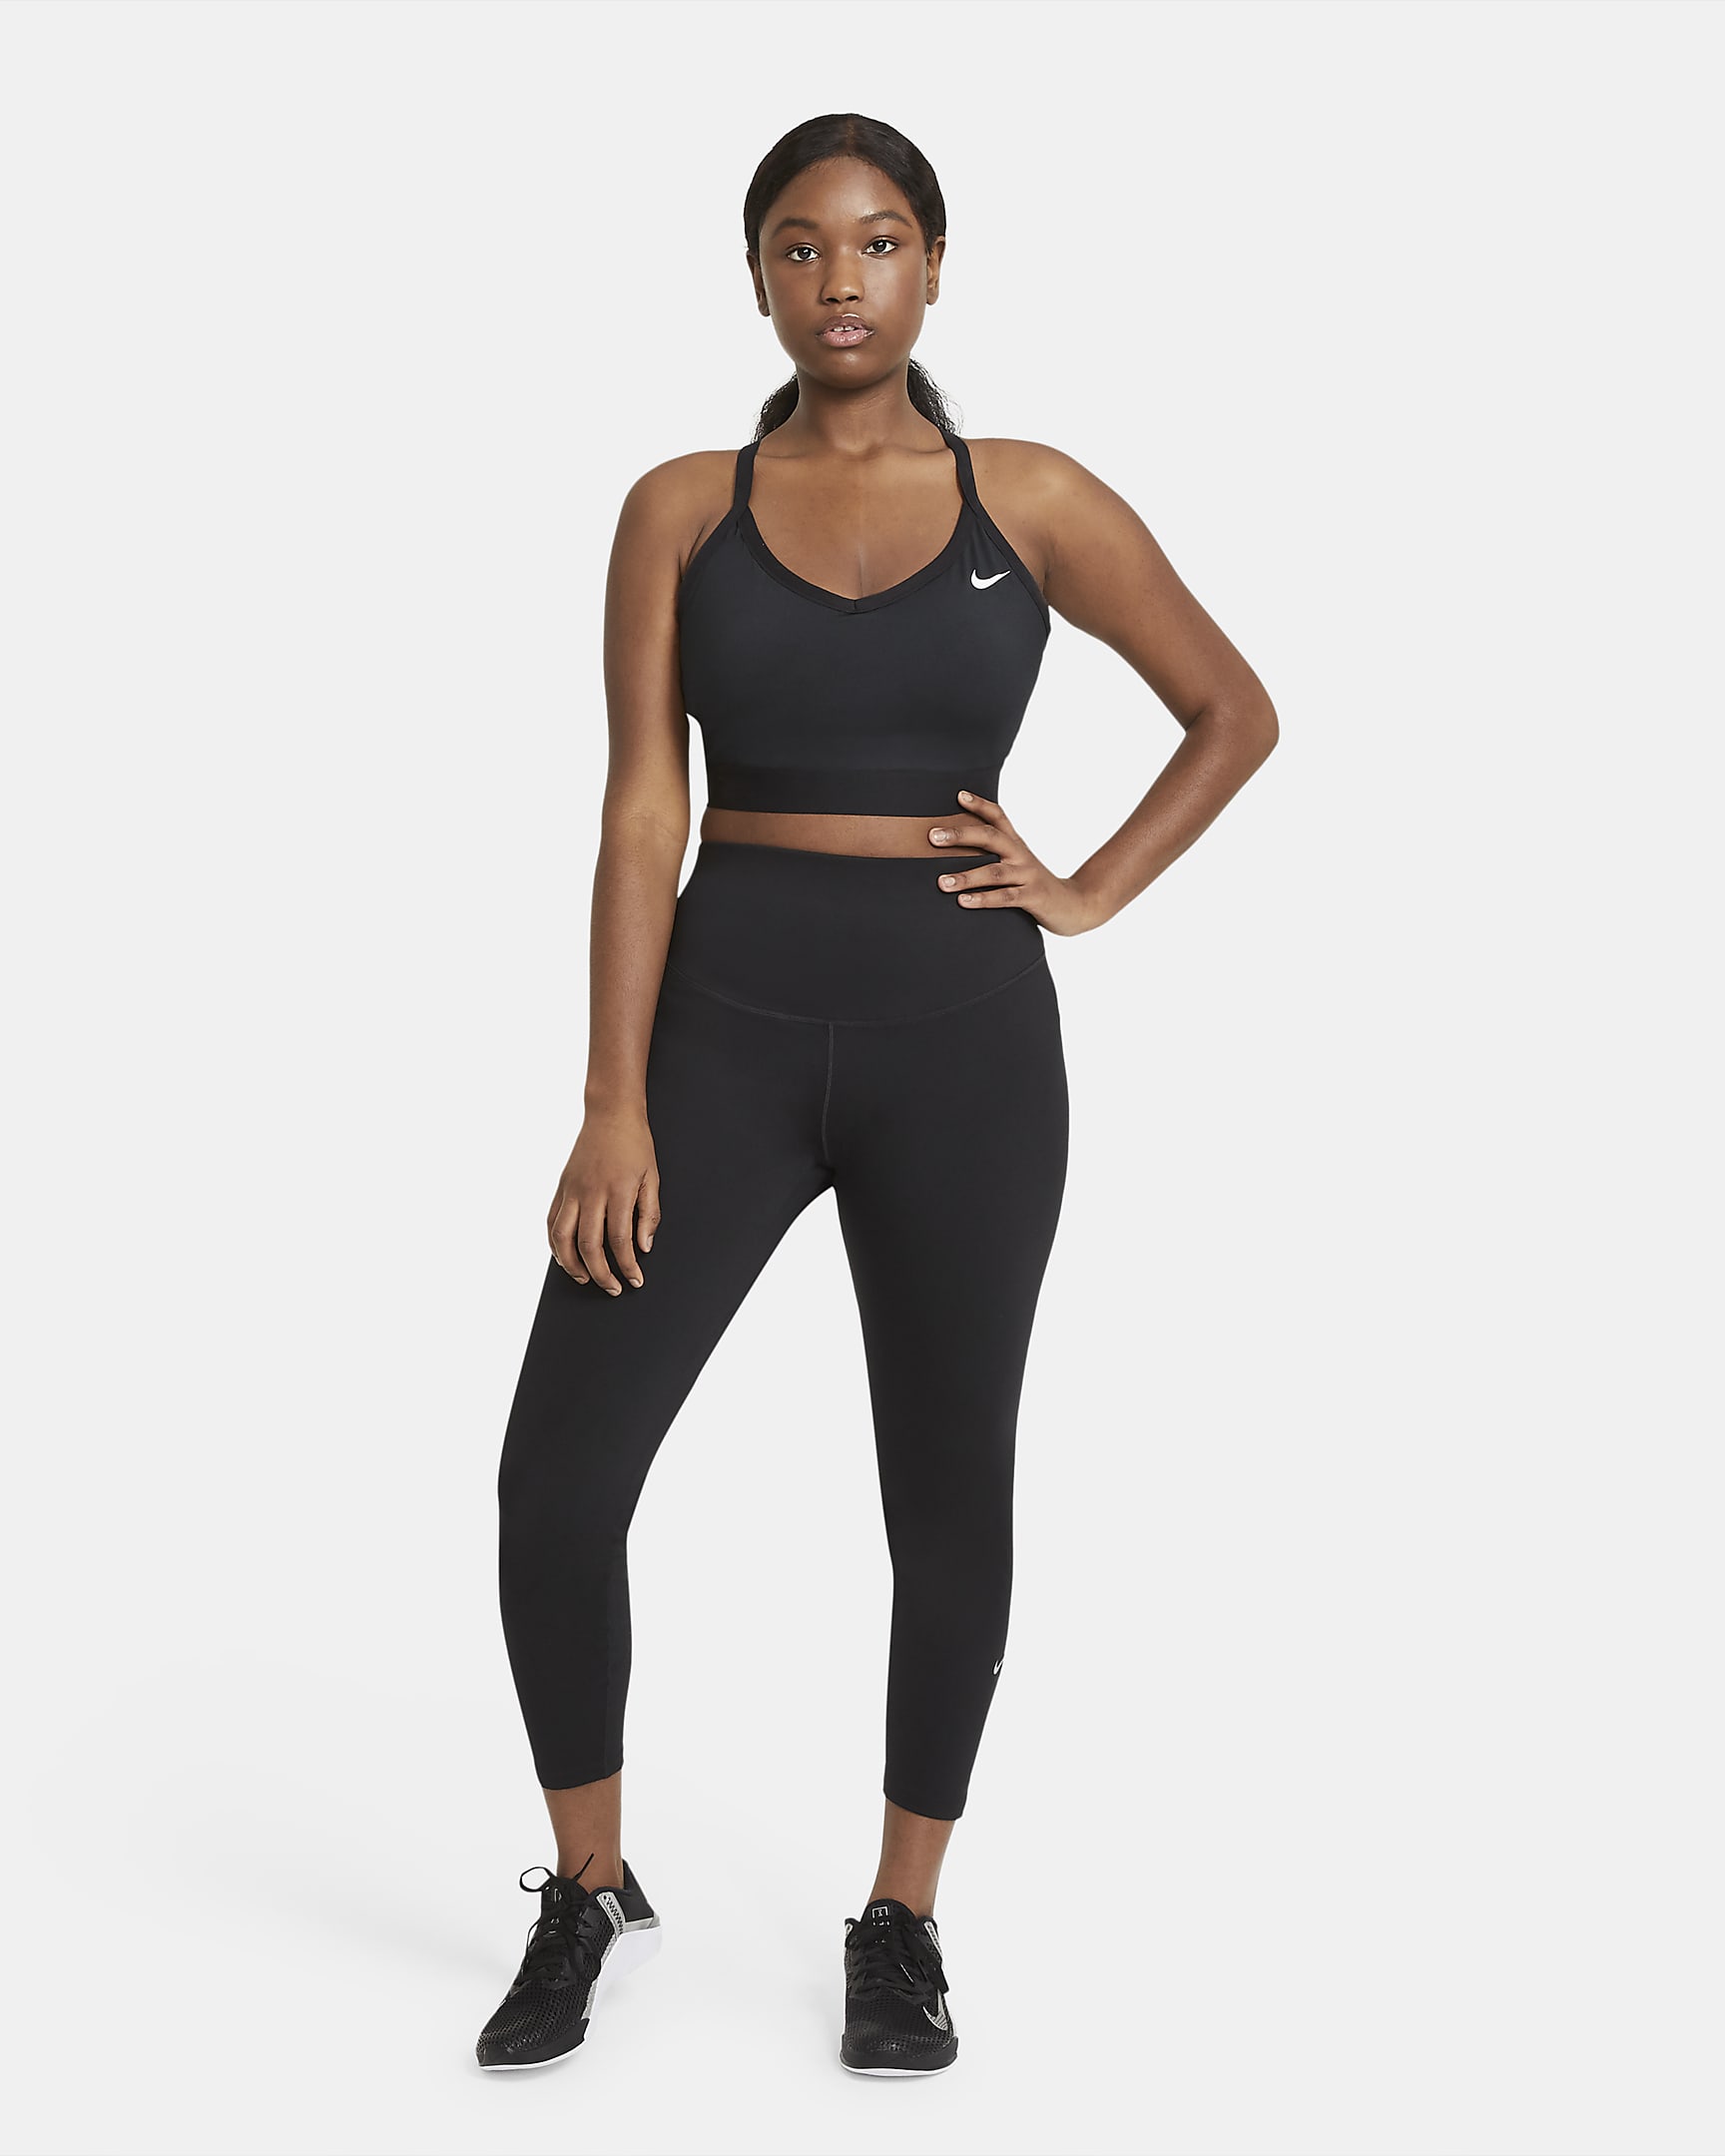 Nike One Women's Mid-Rise Leggings (Plus Size) - Black/White